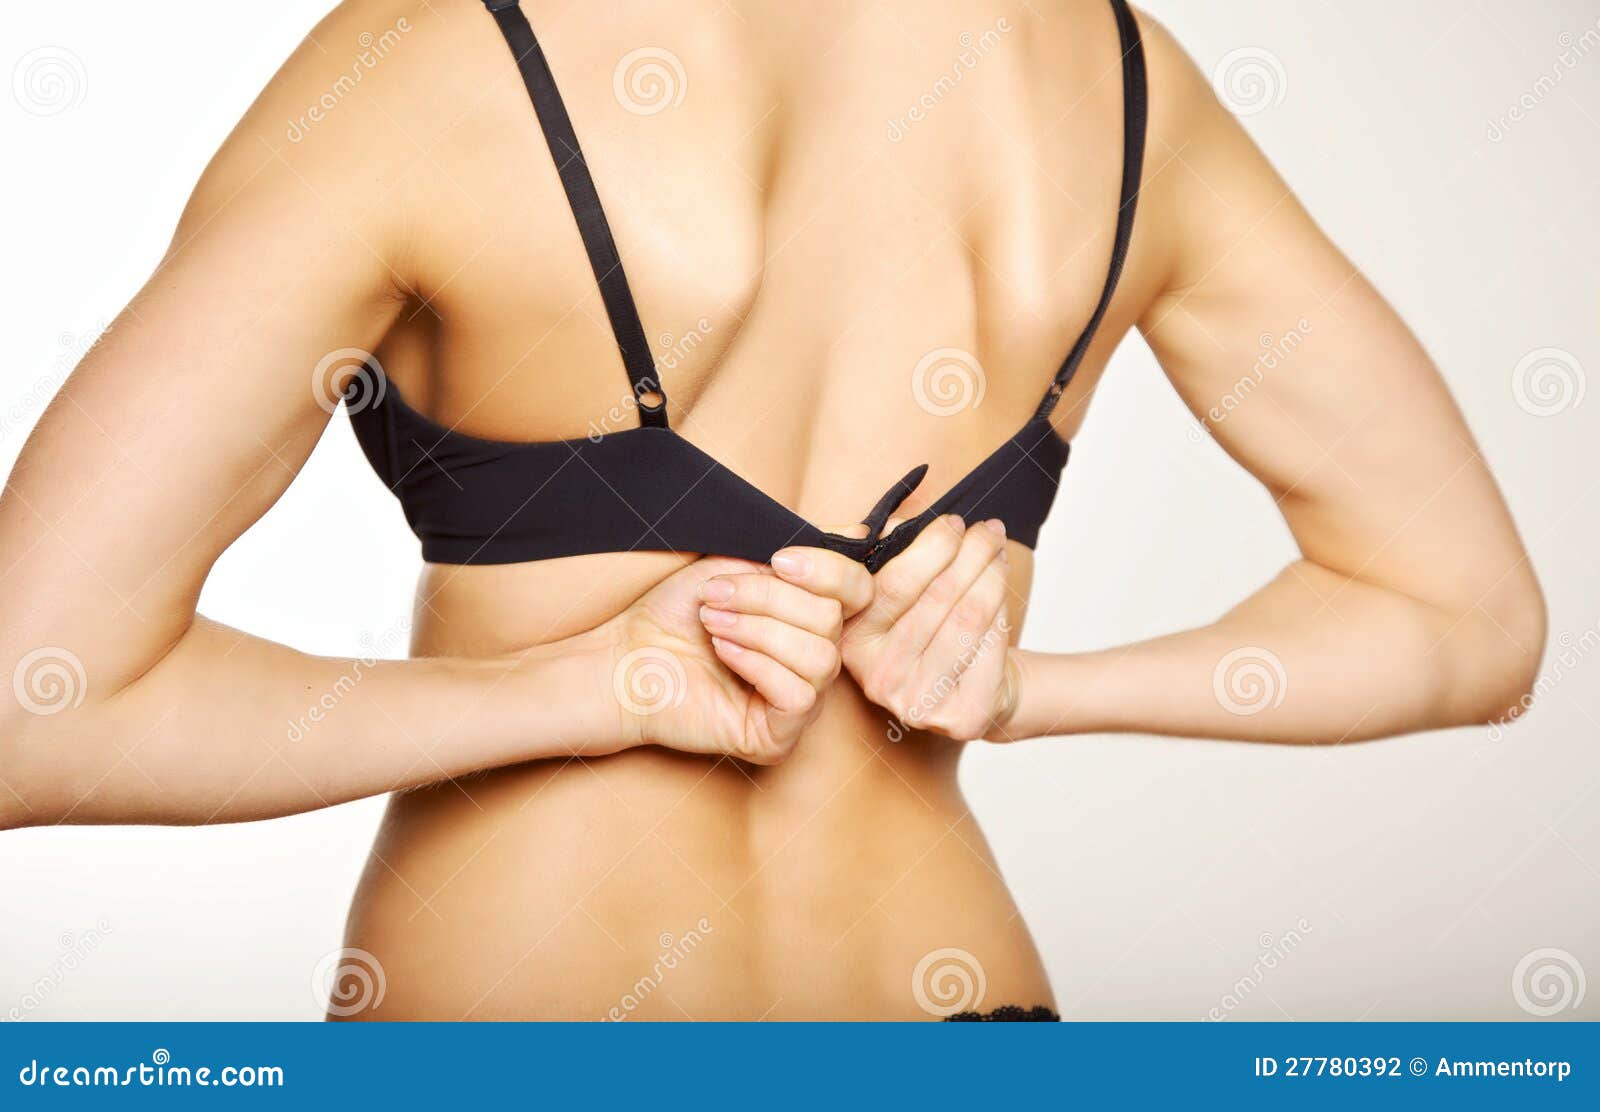 Woman unhooking bra on bed - Stock Photo - Dissolve